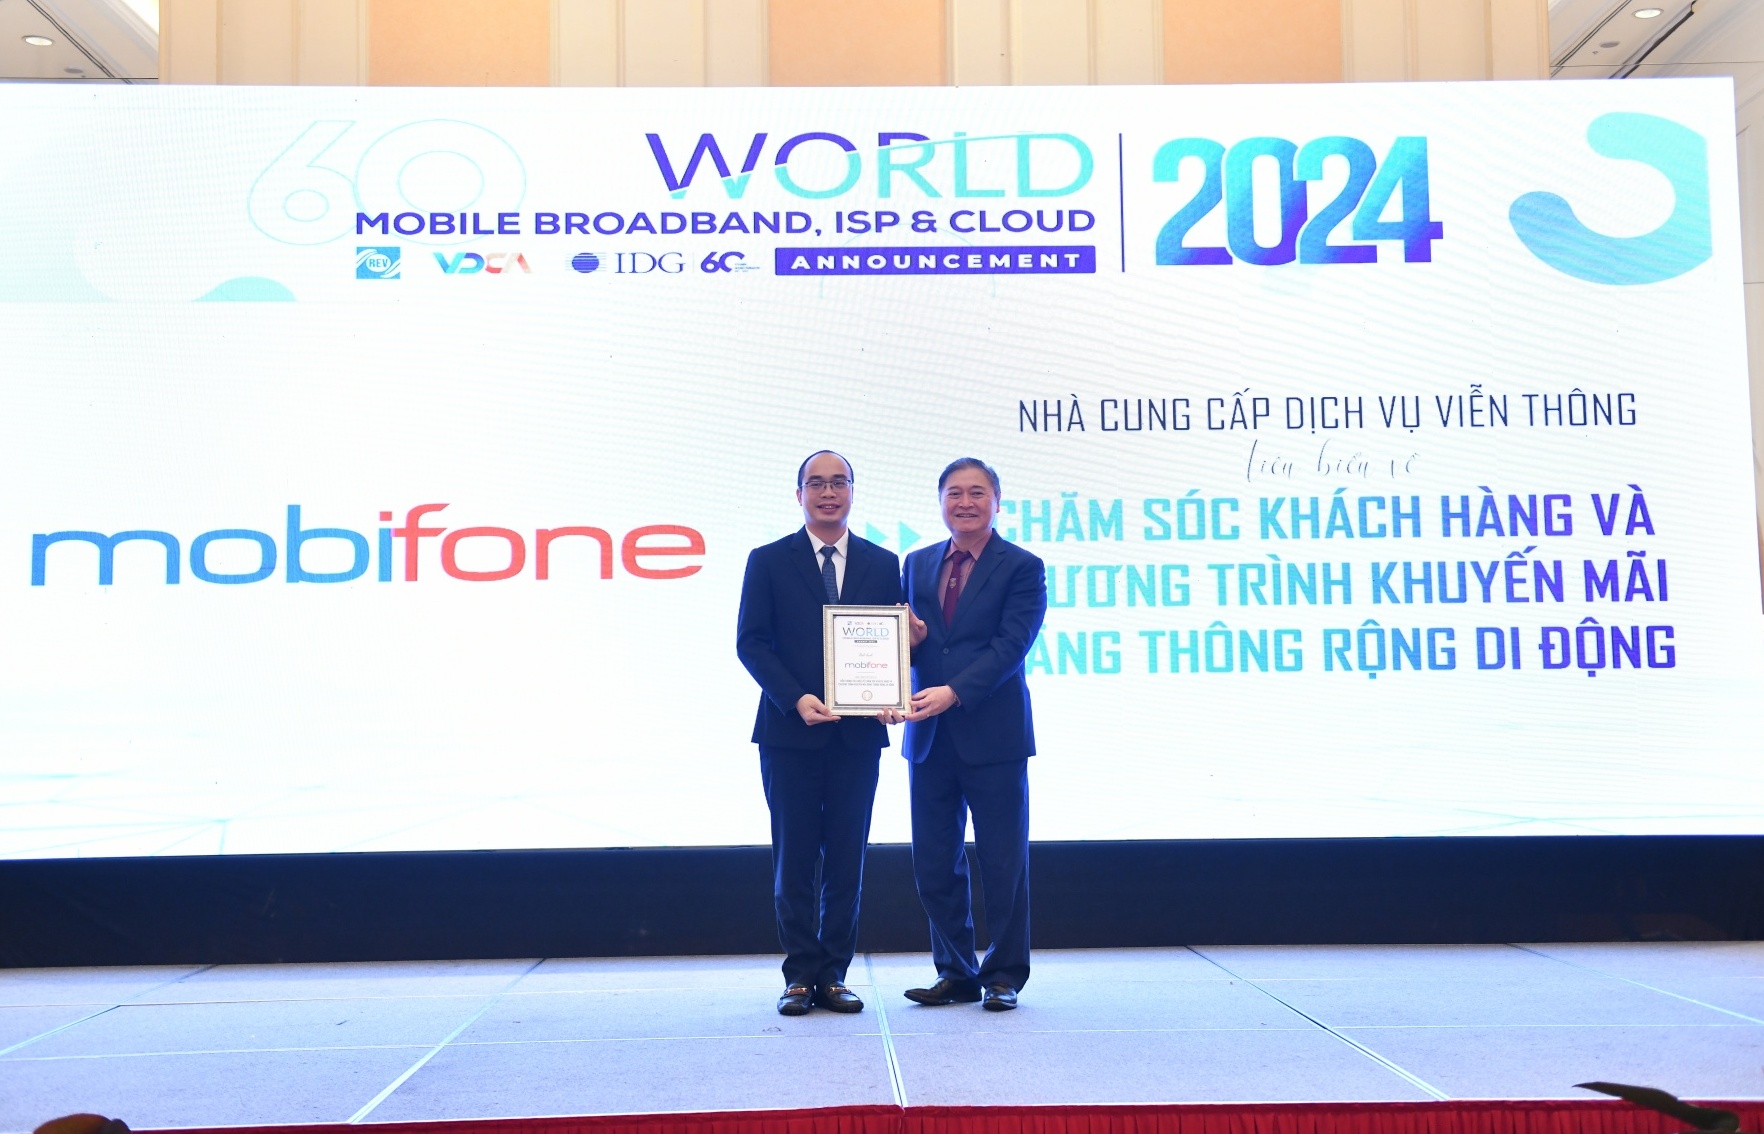 Broadband summit and awards held in Vietnam